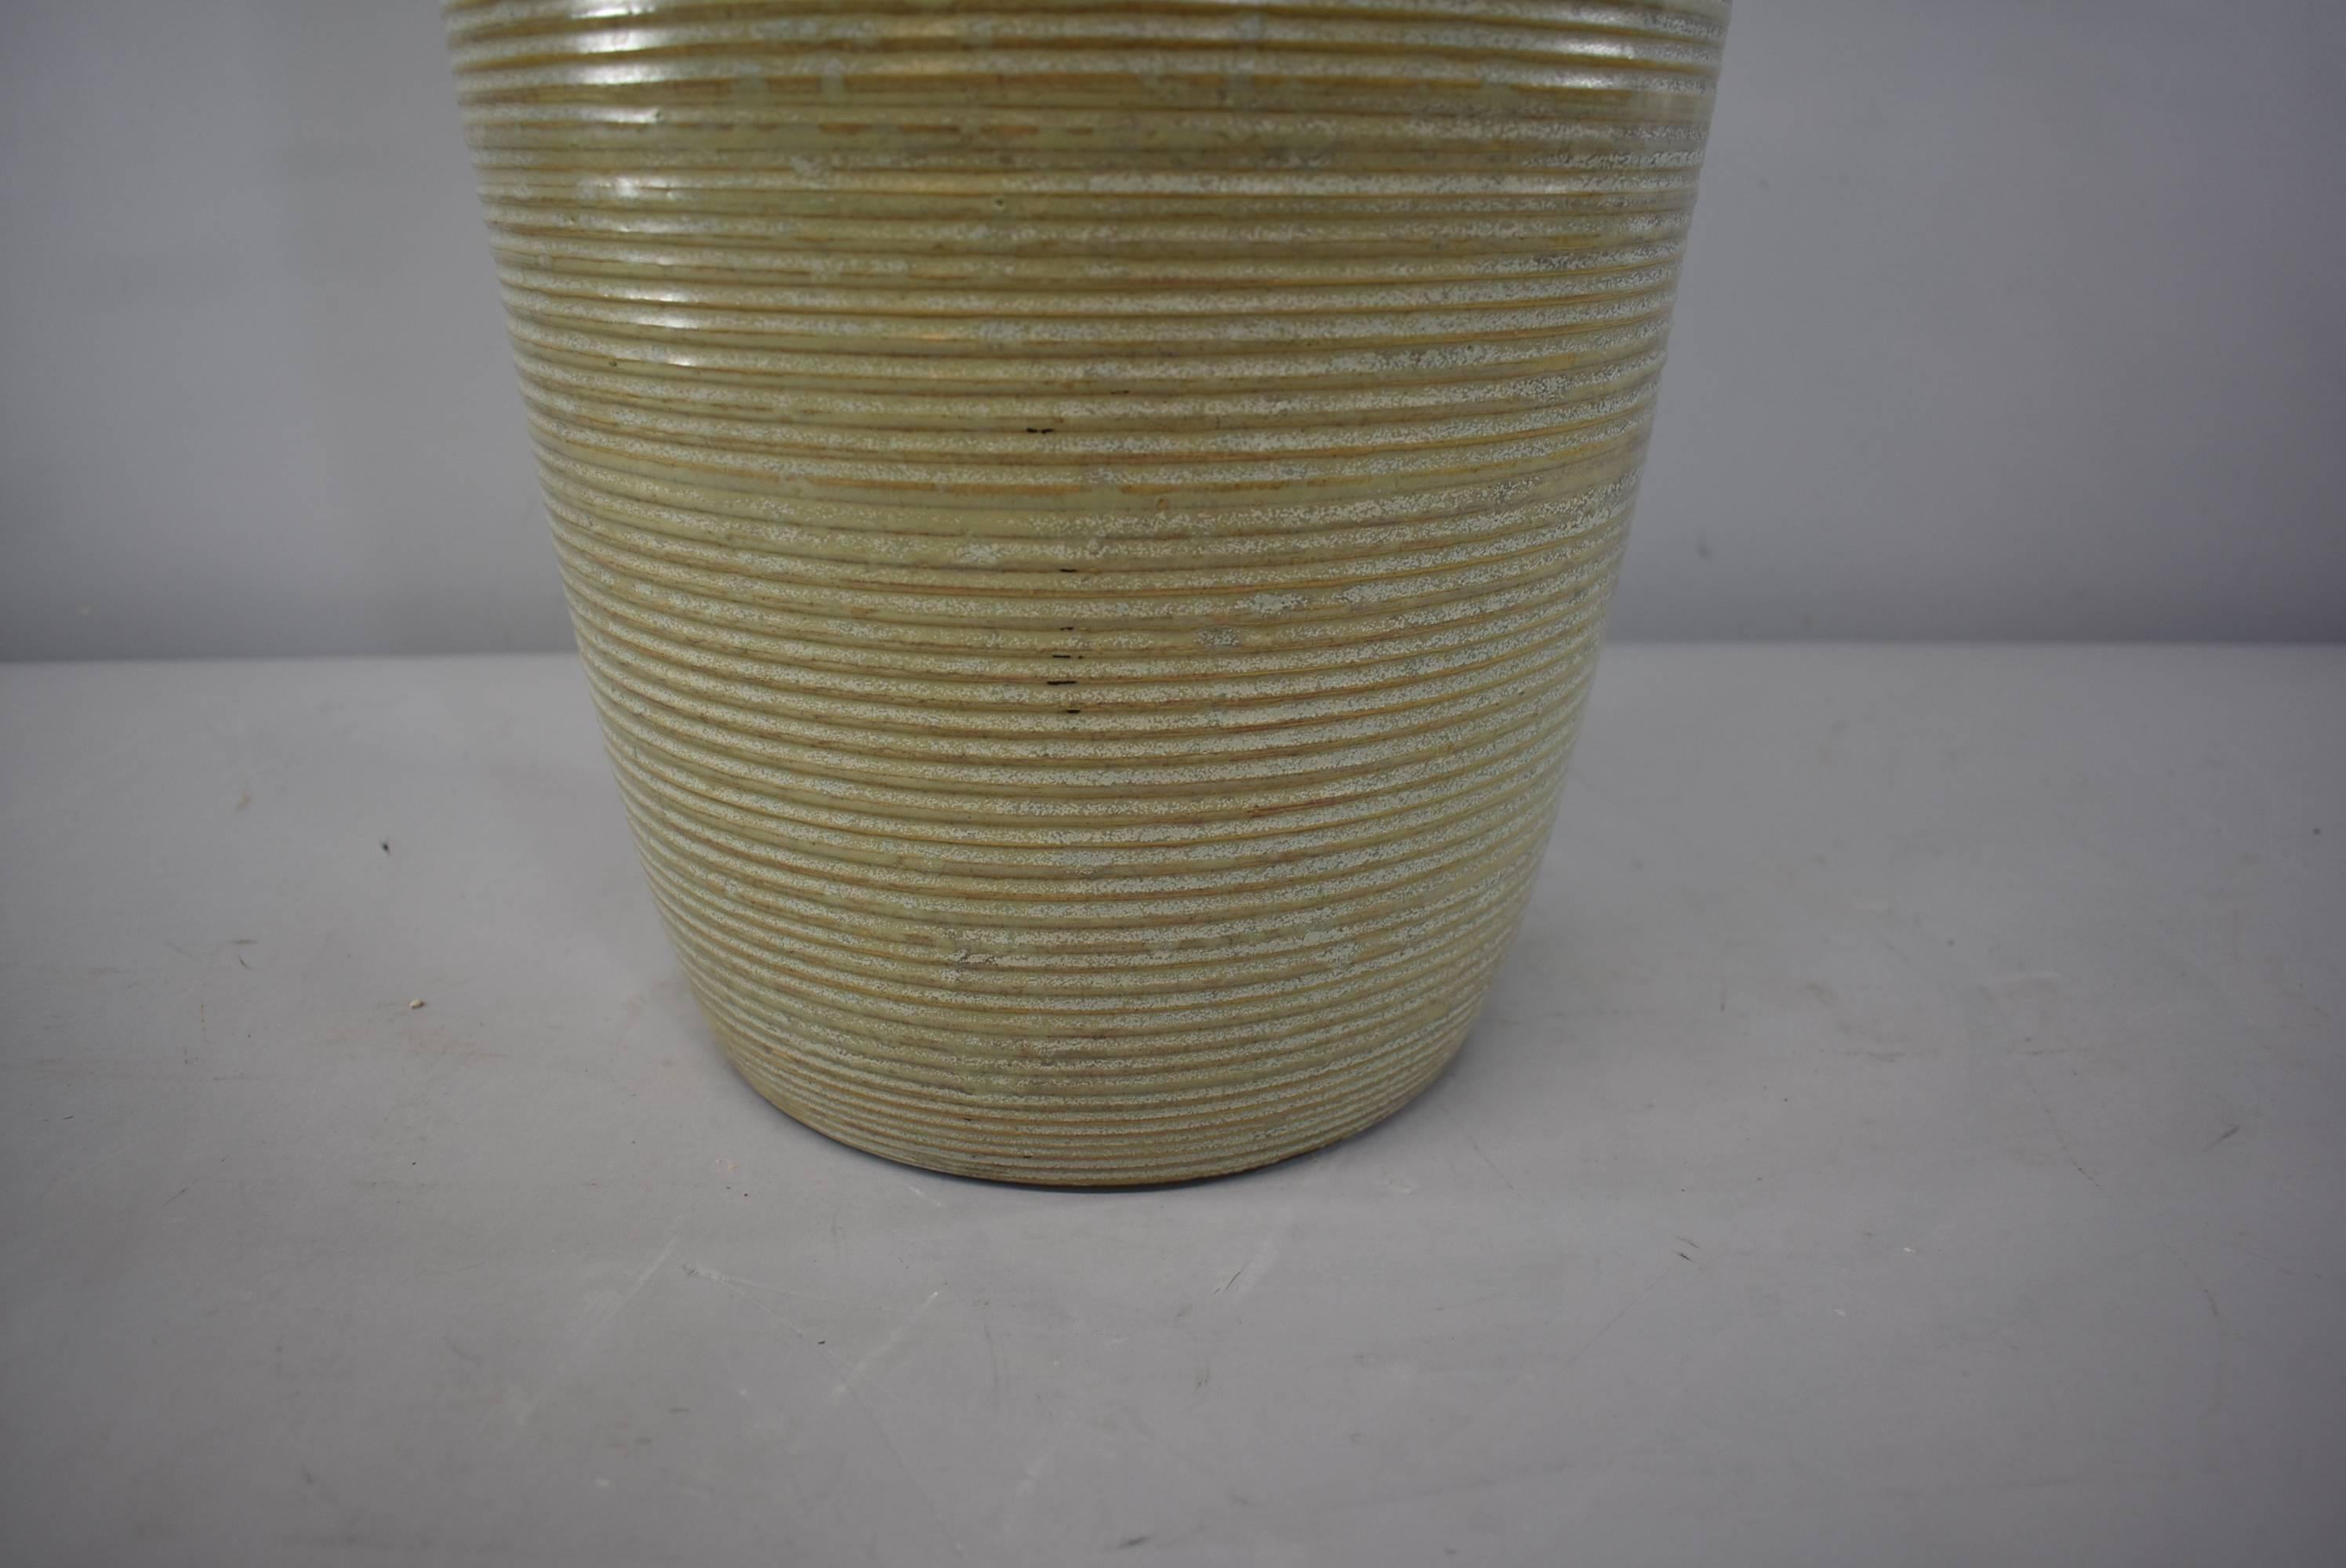 monmouth pottery catalog